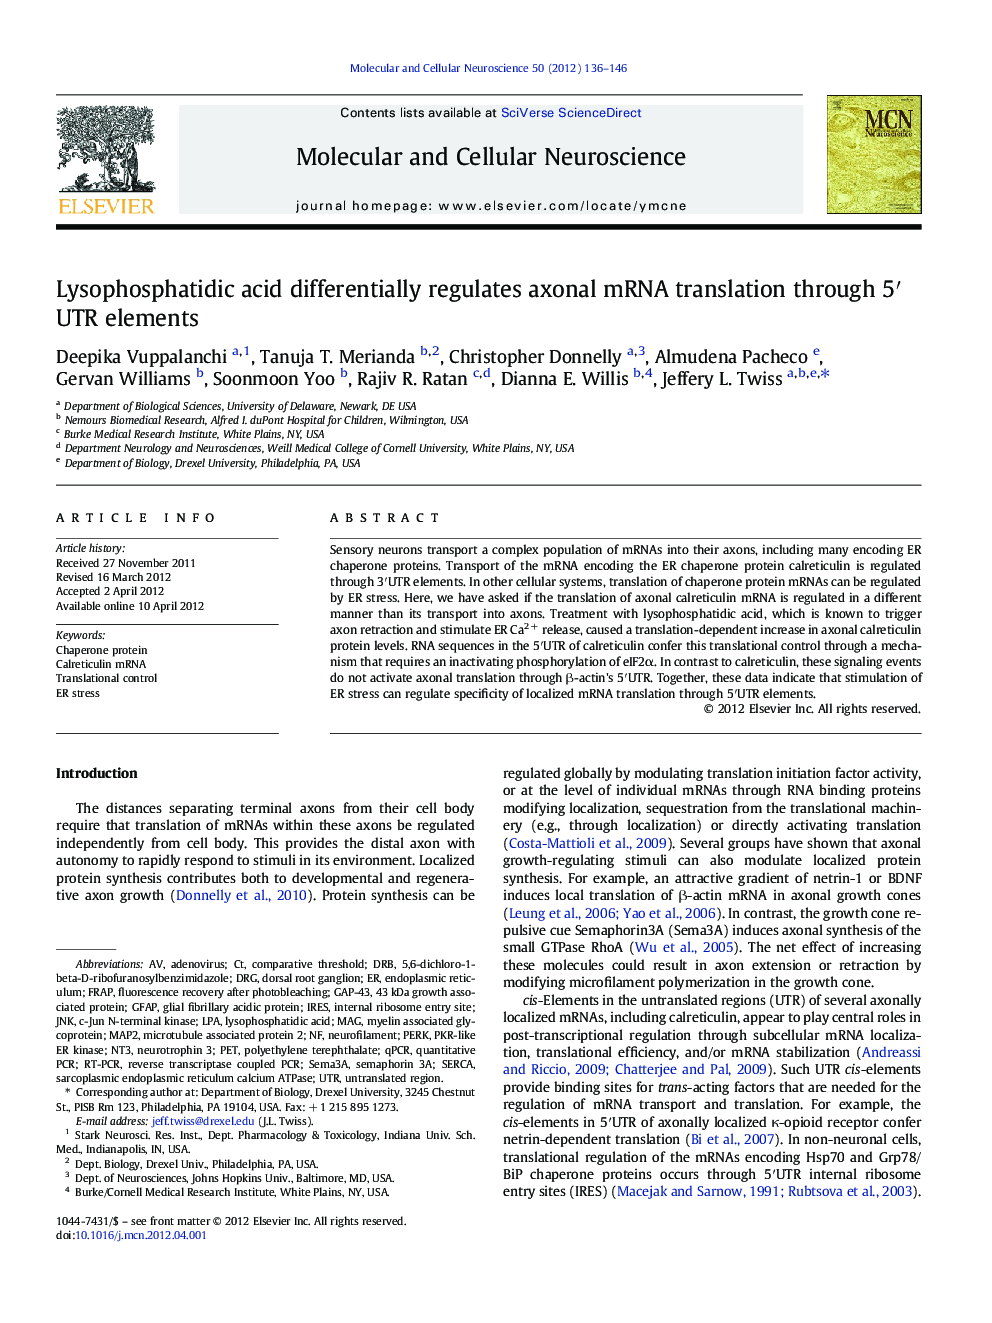 Lysophosphatidic acid differentially regulates axonal mRNA translation through 5′UTR elements